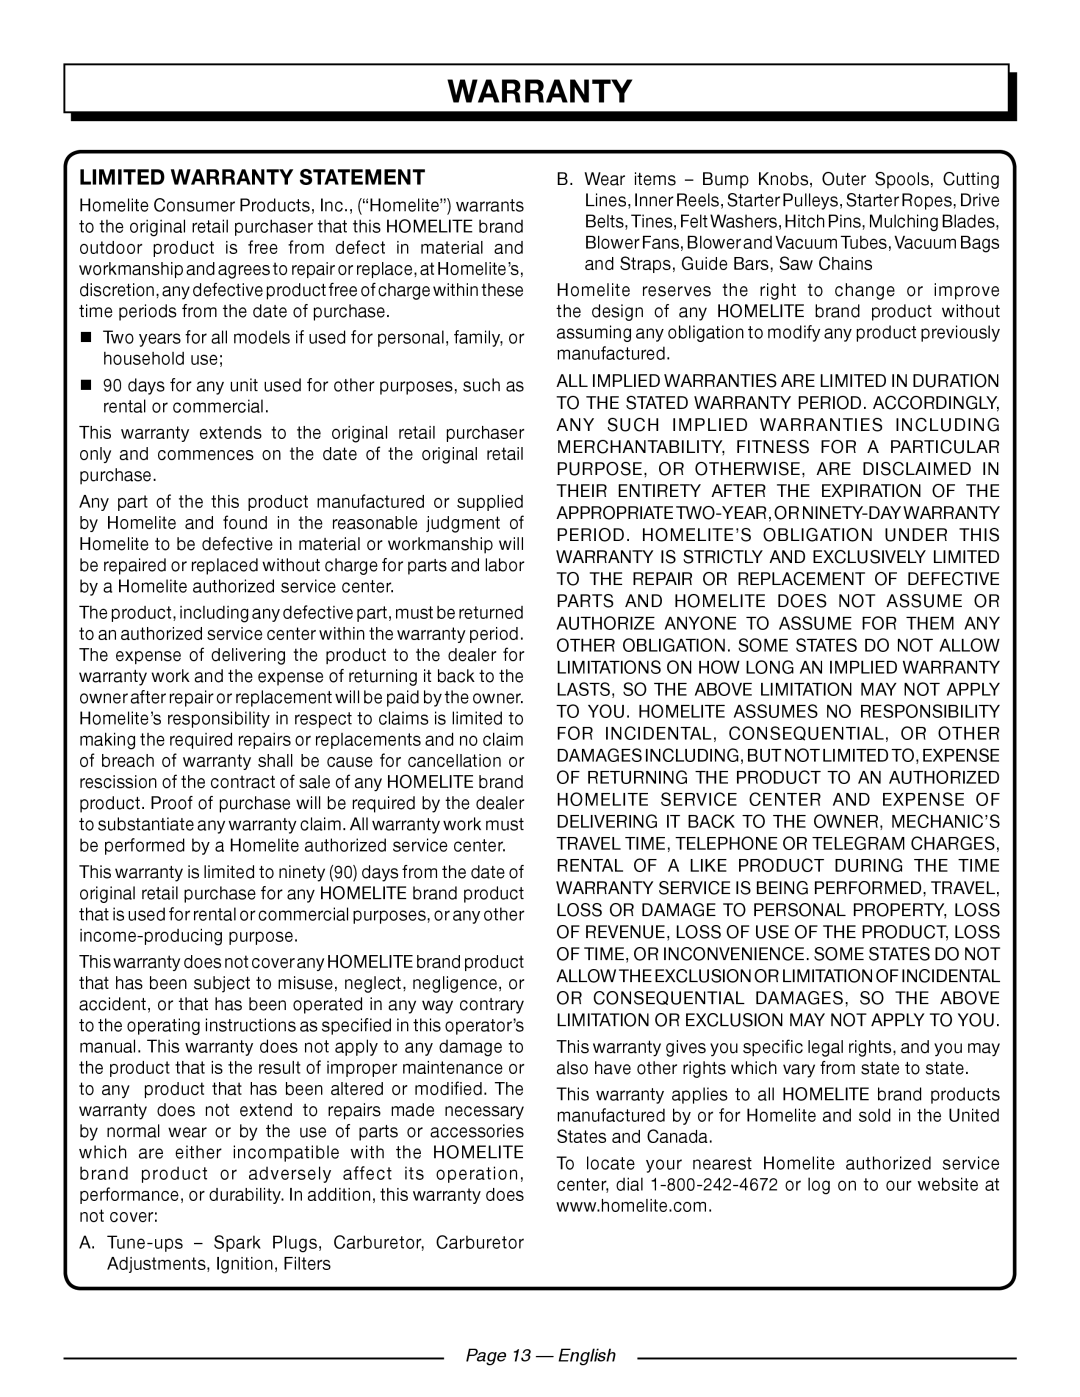 Homelite UT41121 manuel dutilisation Limited Warranty Statement, Page 13 - English 